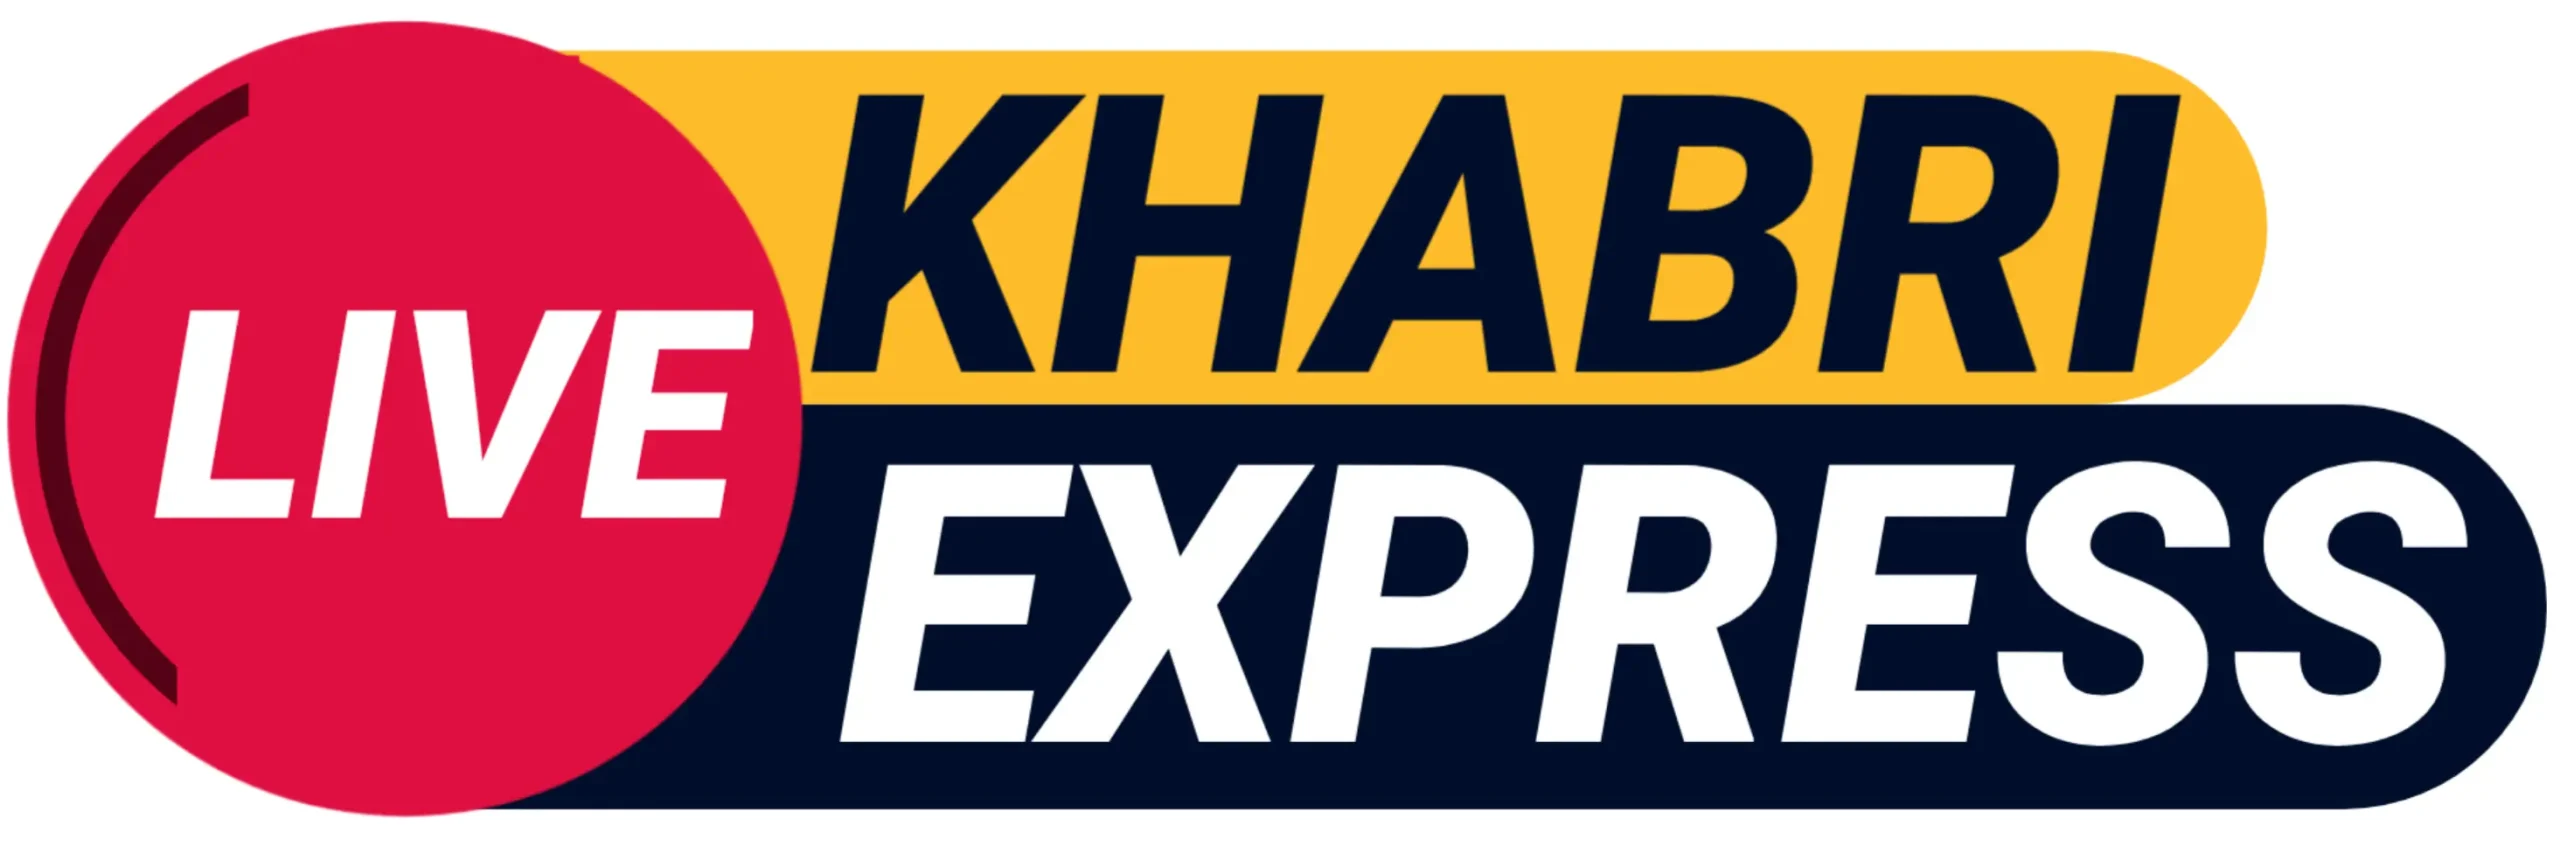 Khabri Express